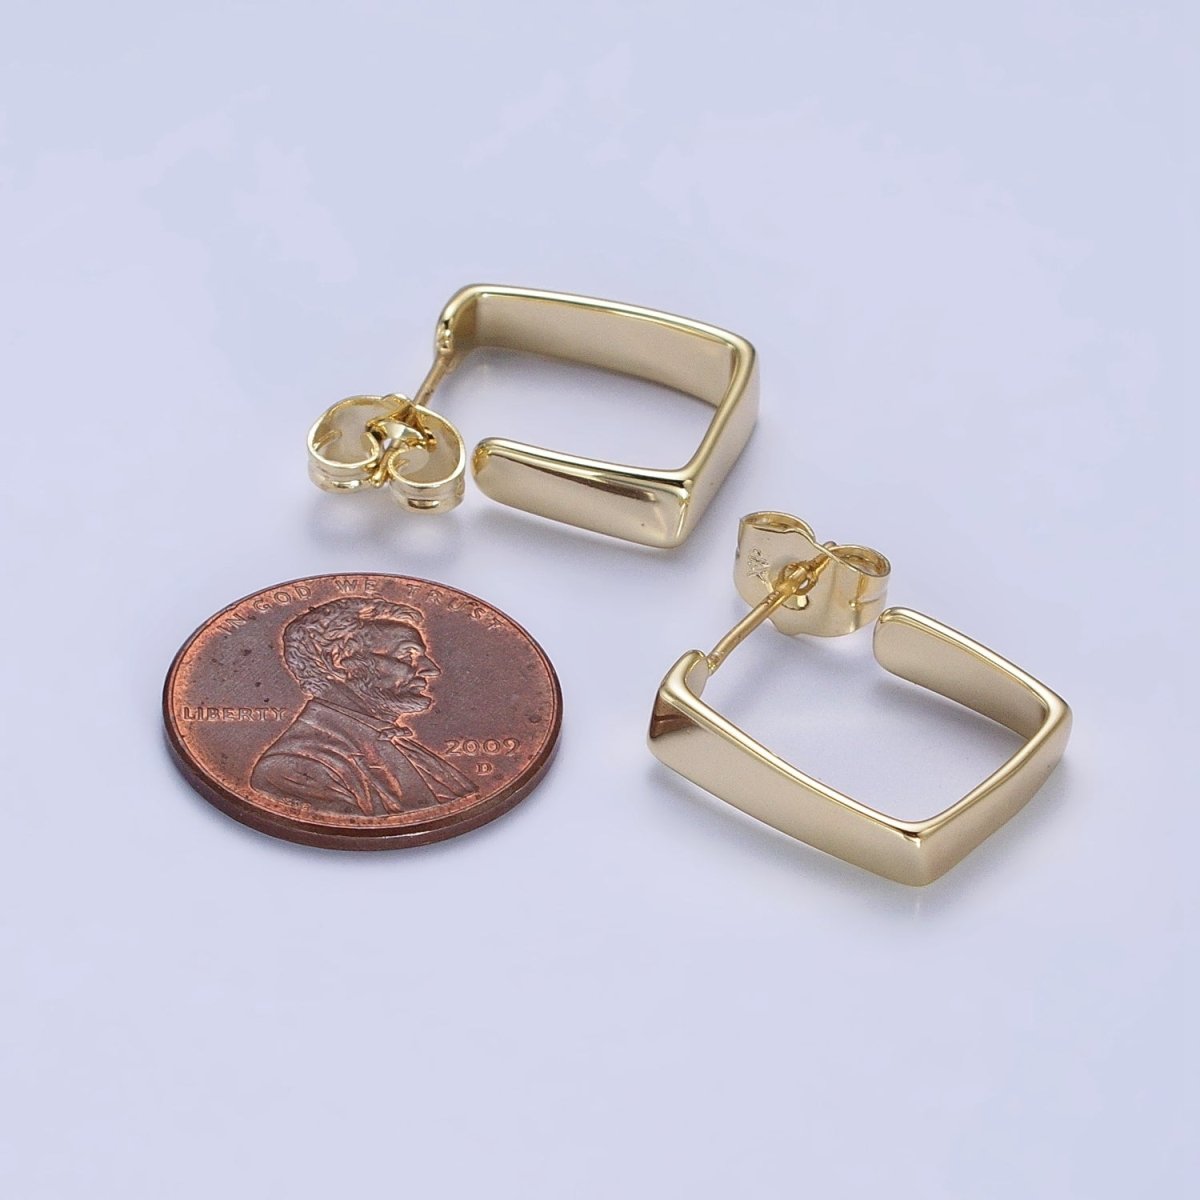 14K Gold Filled J-Shaped Rectangular Geometric Hoop Earrings | Ab330 - DLUXCA